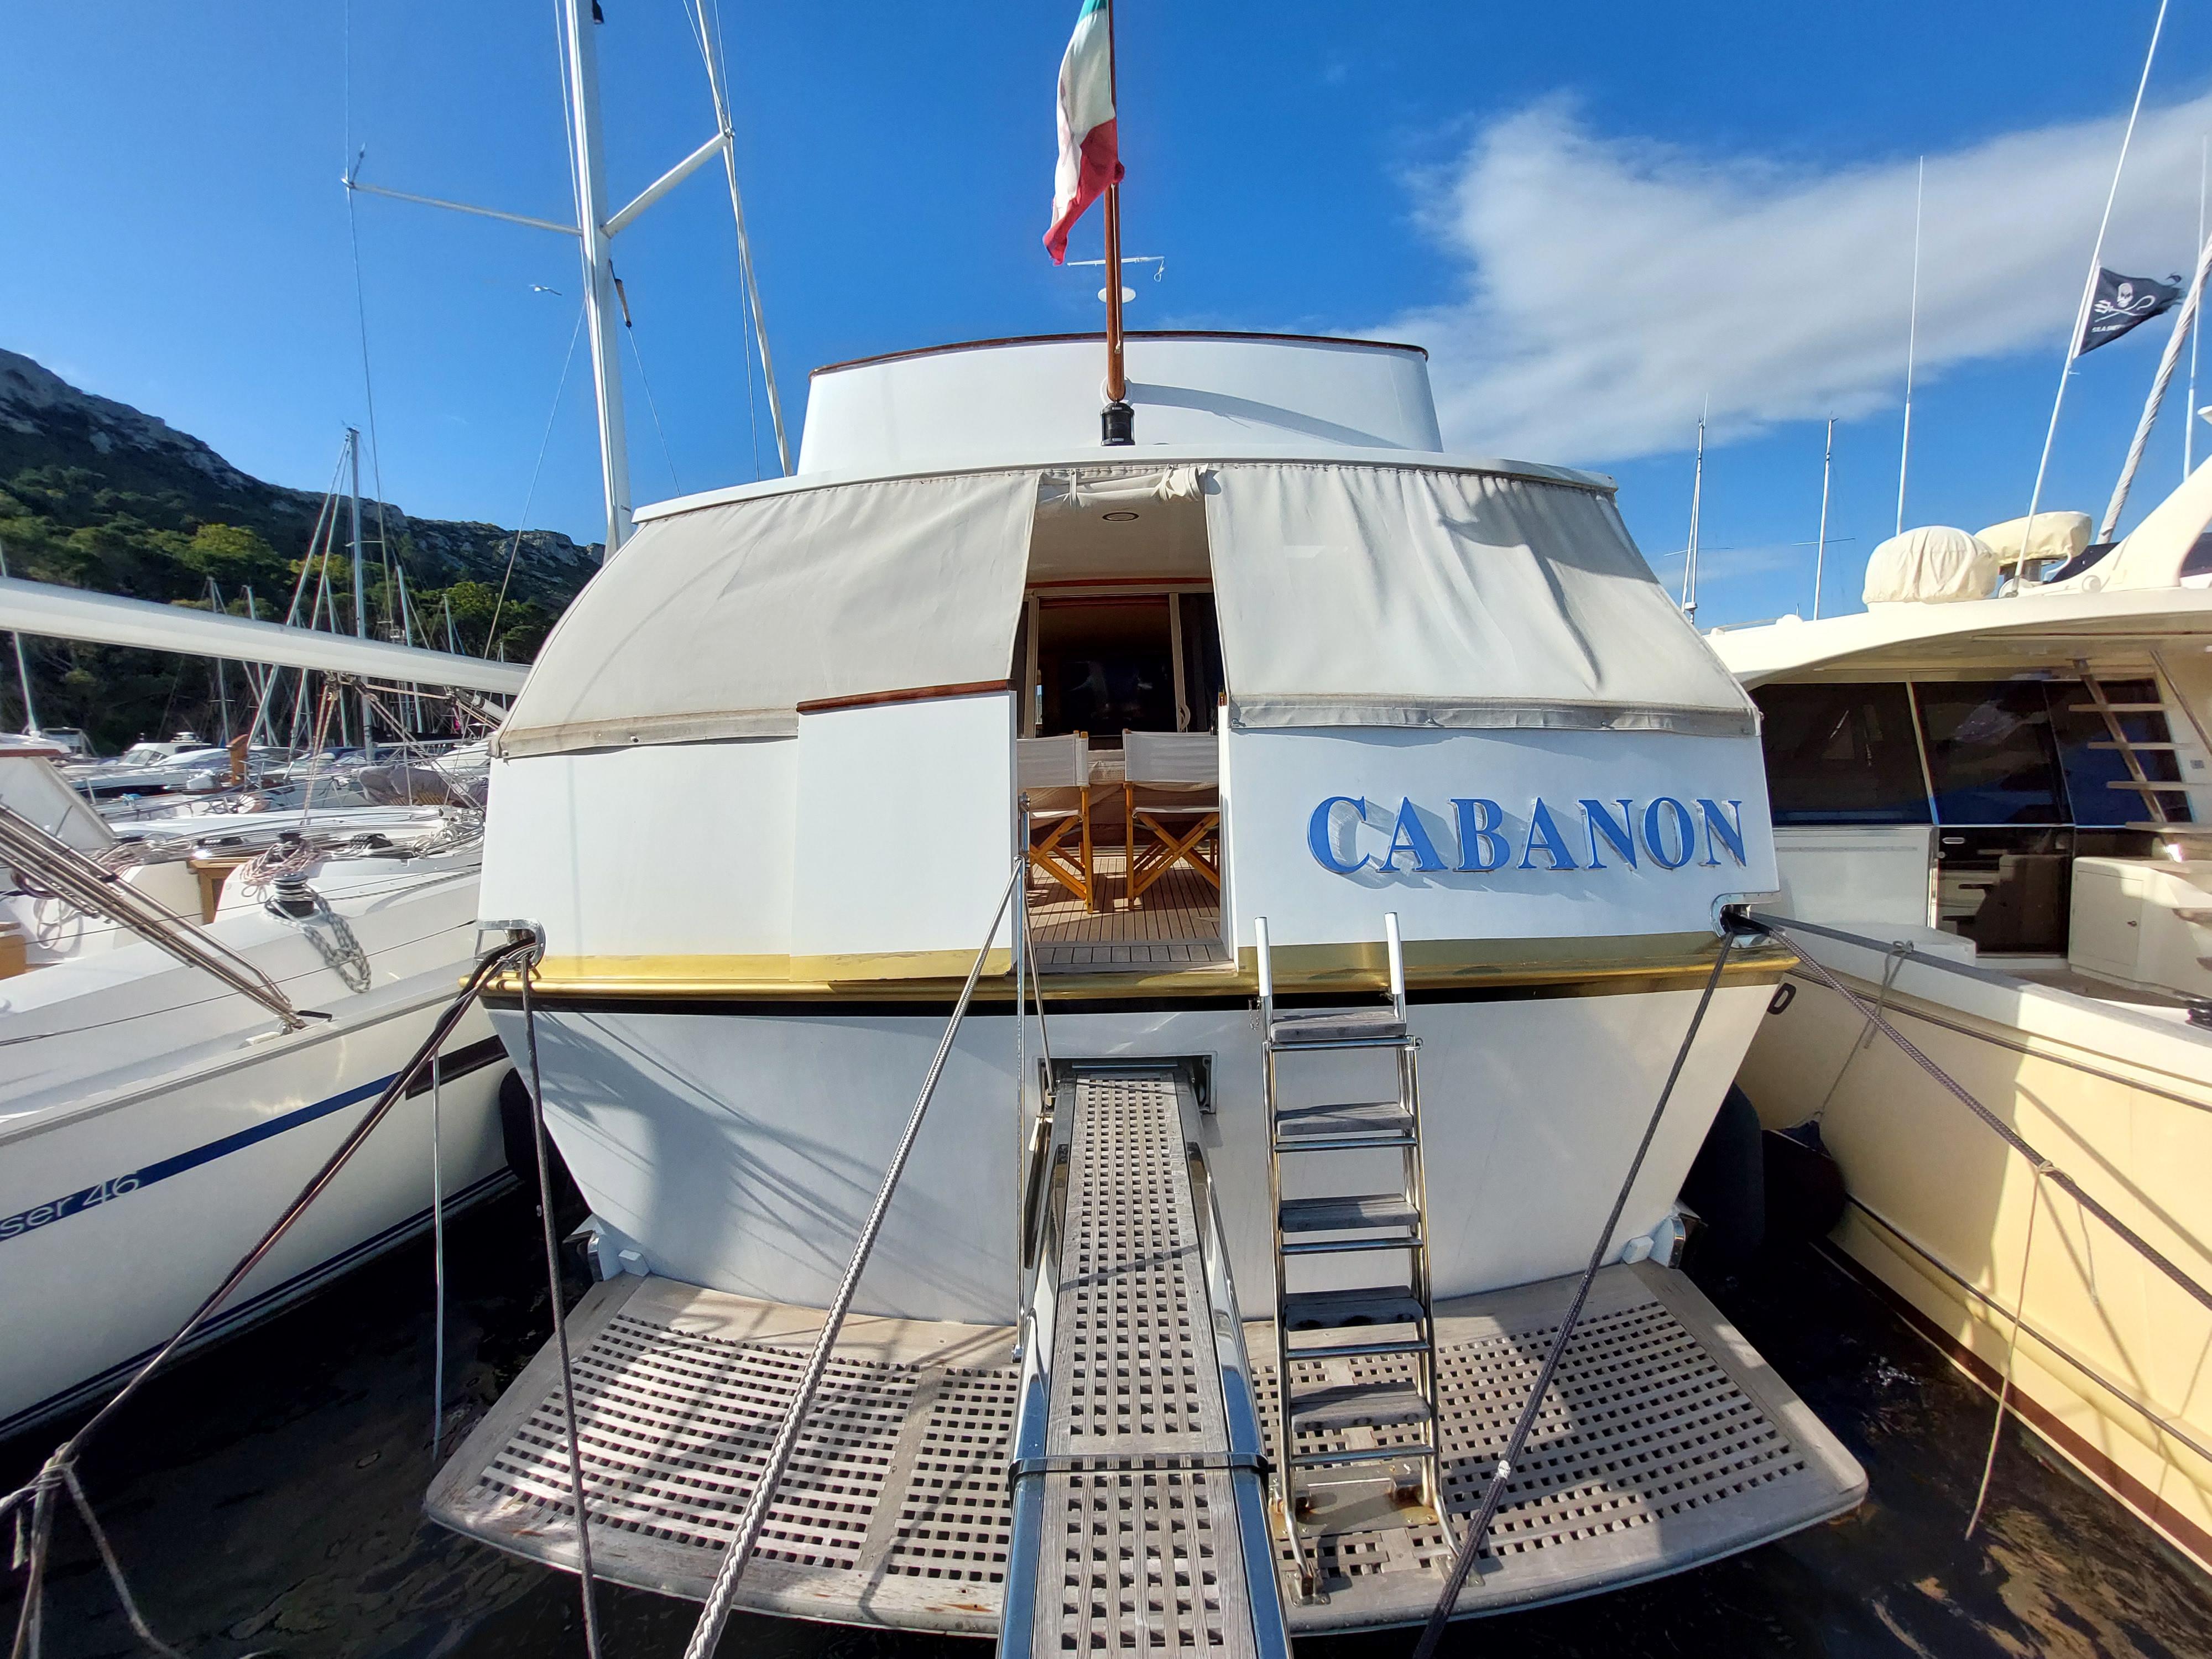 Picchiotti 68 Cabanon, welcome on board